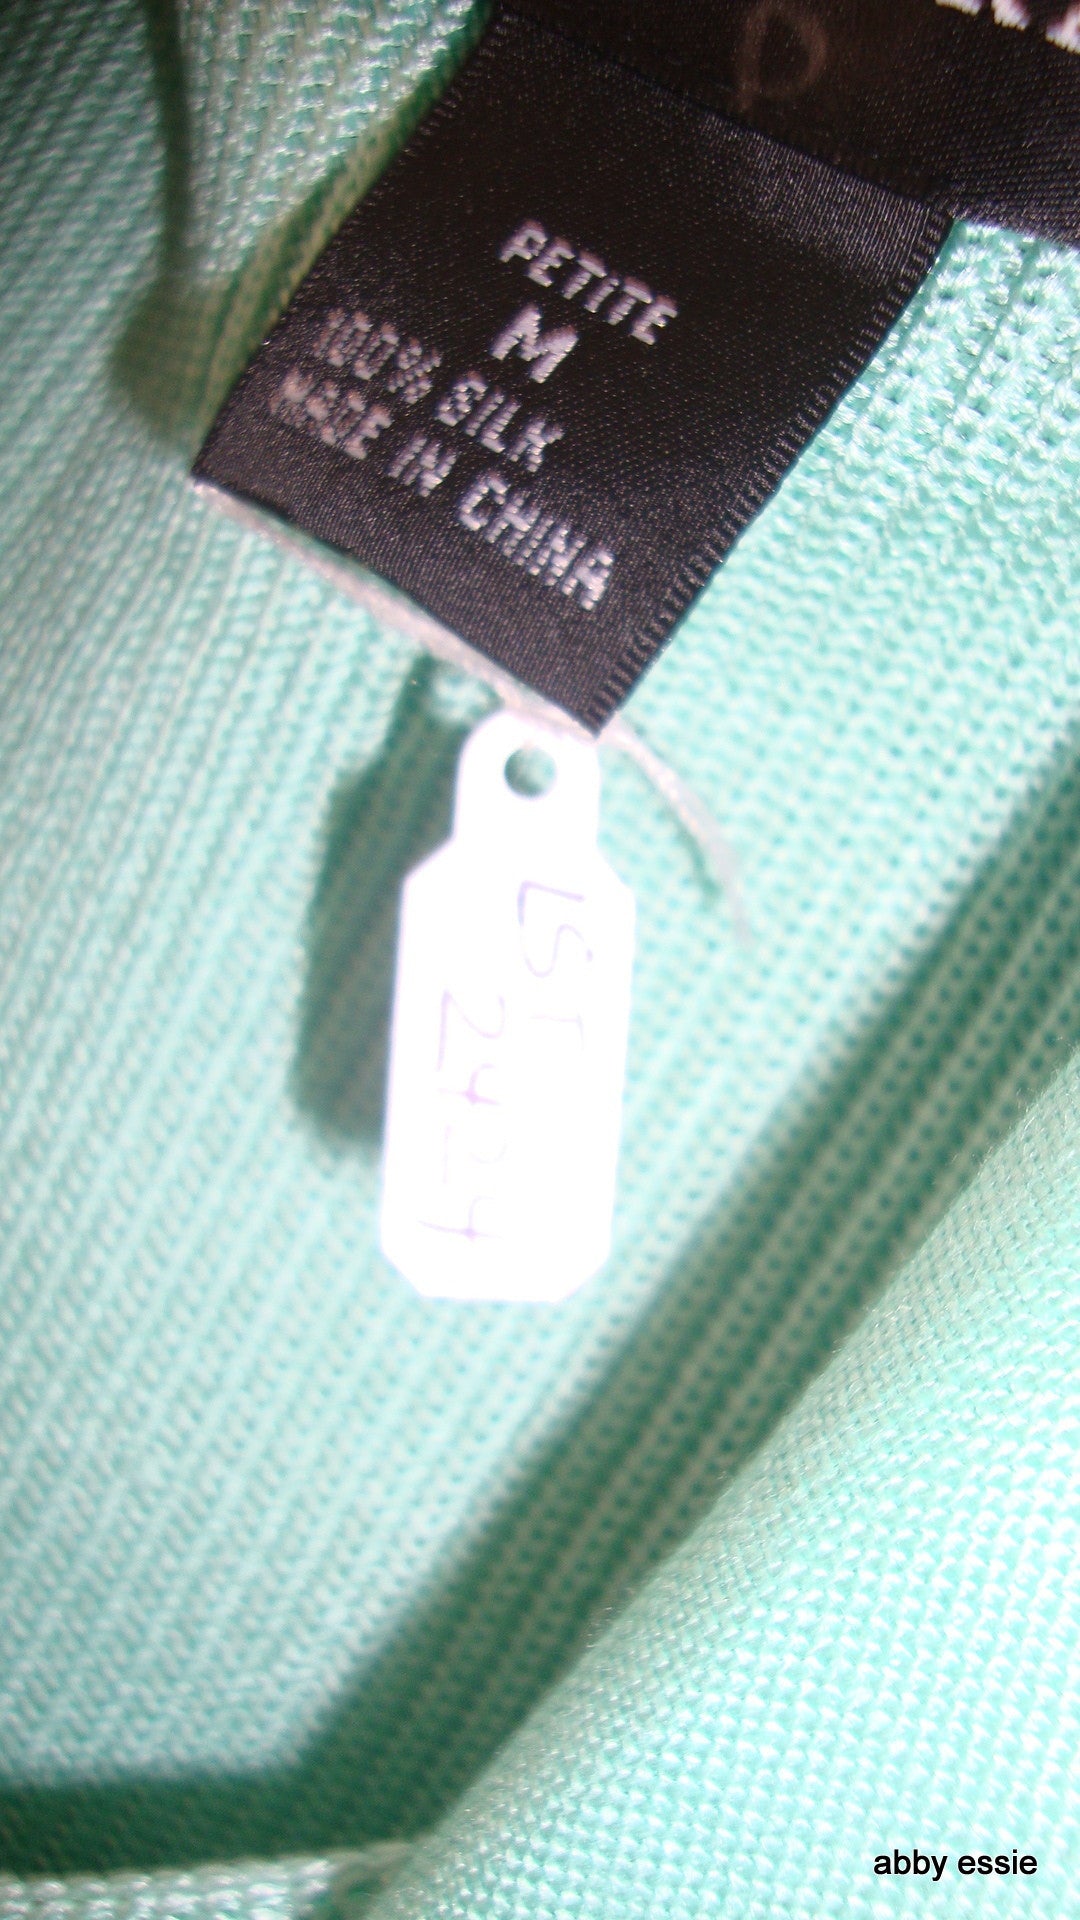 Linda Allard Ellen Tracy 3 Pc Green Linen Skirt Suit Petite Abby Essie